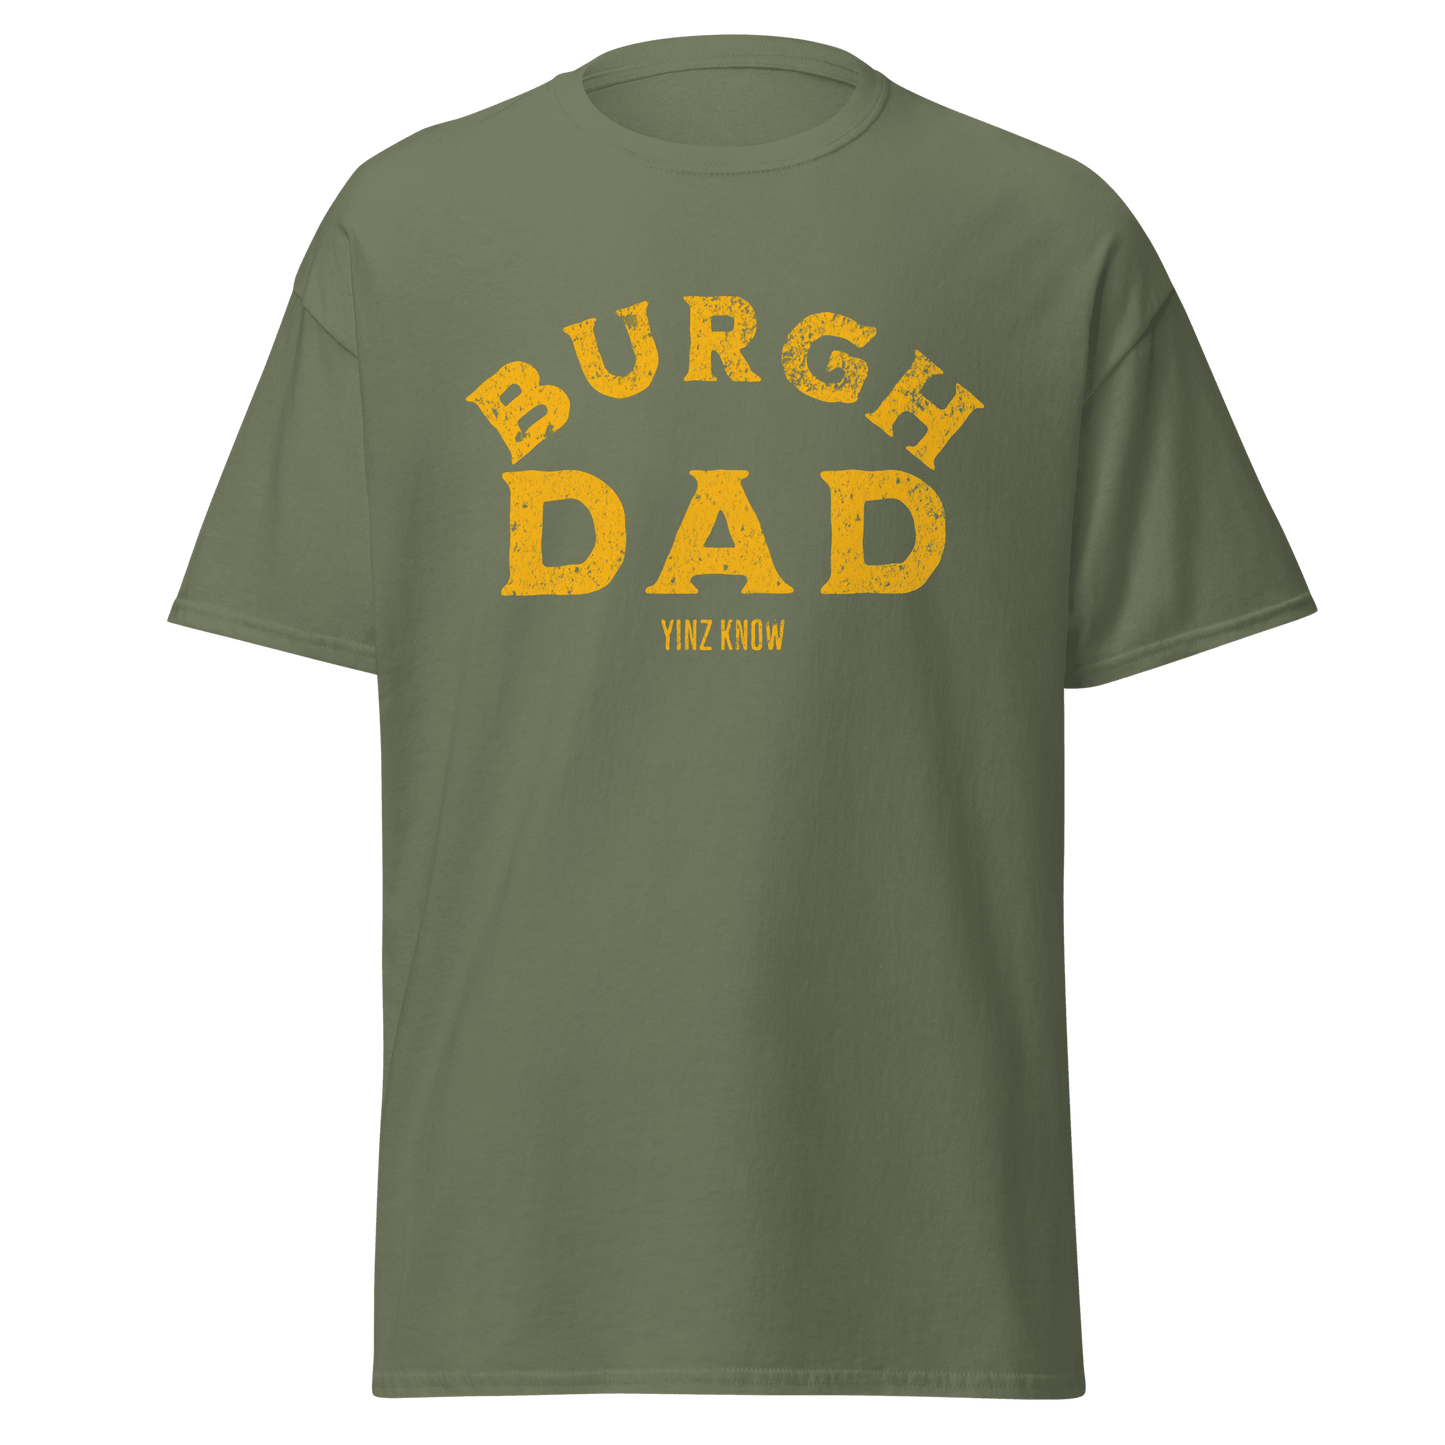 Burgh Dad T-Shirt Yinzergear Military Green S 